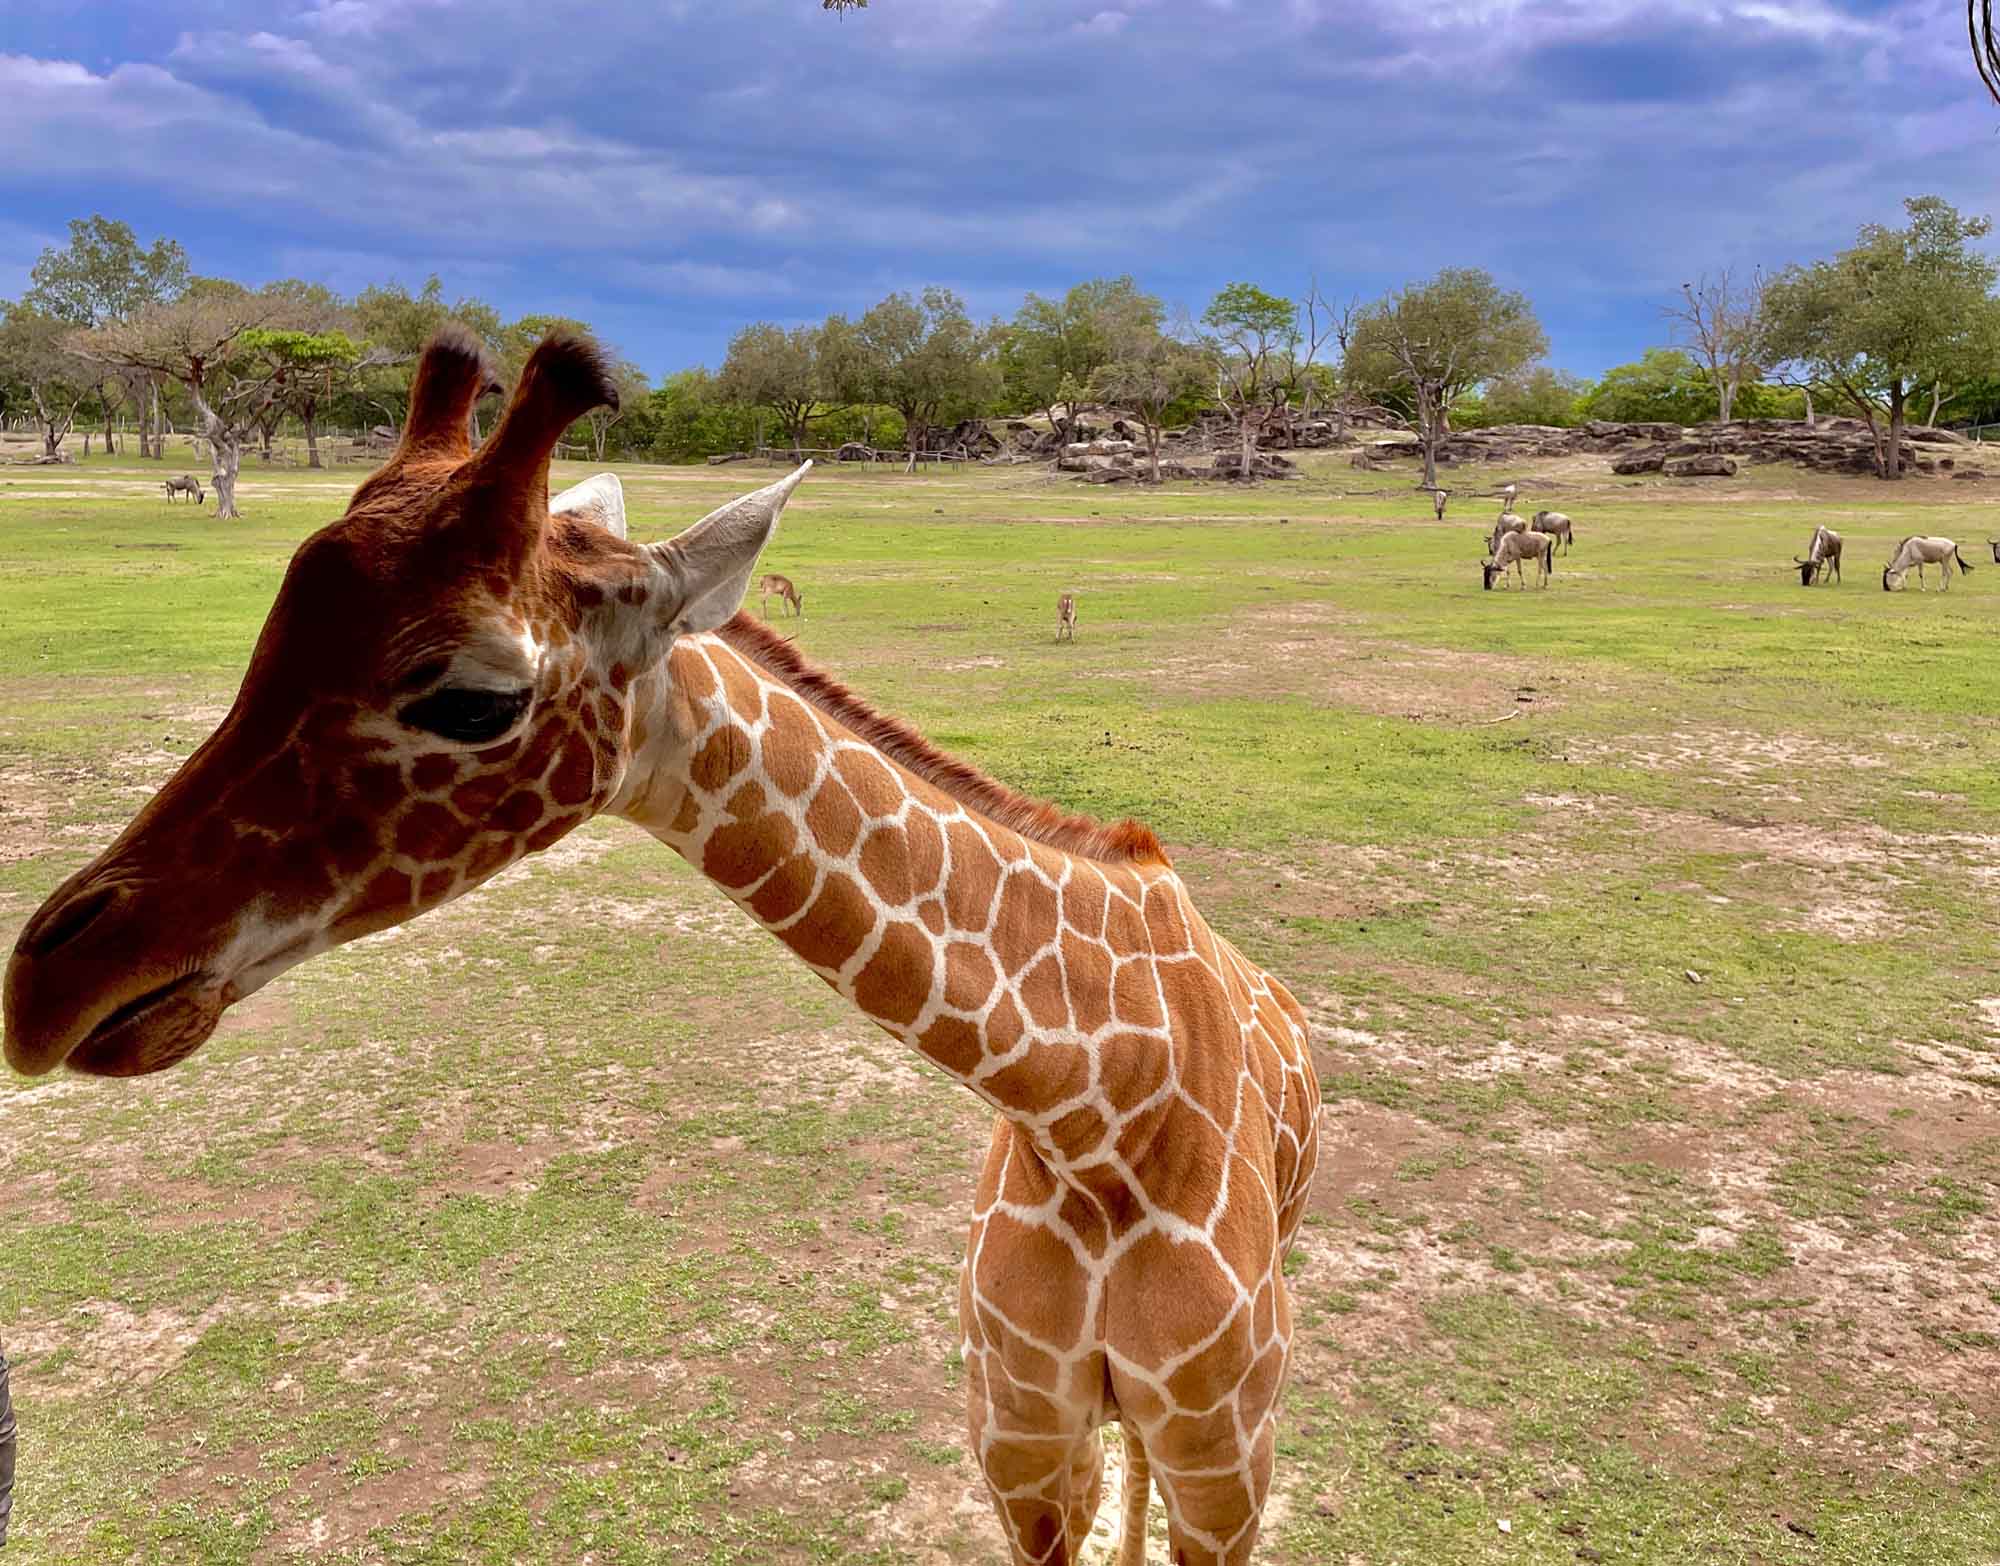 Feeding a Giraffe at Ponderosa Adventure Park